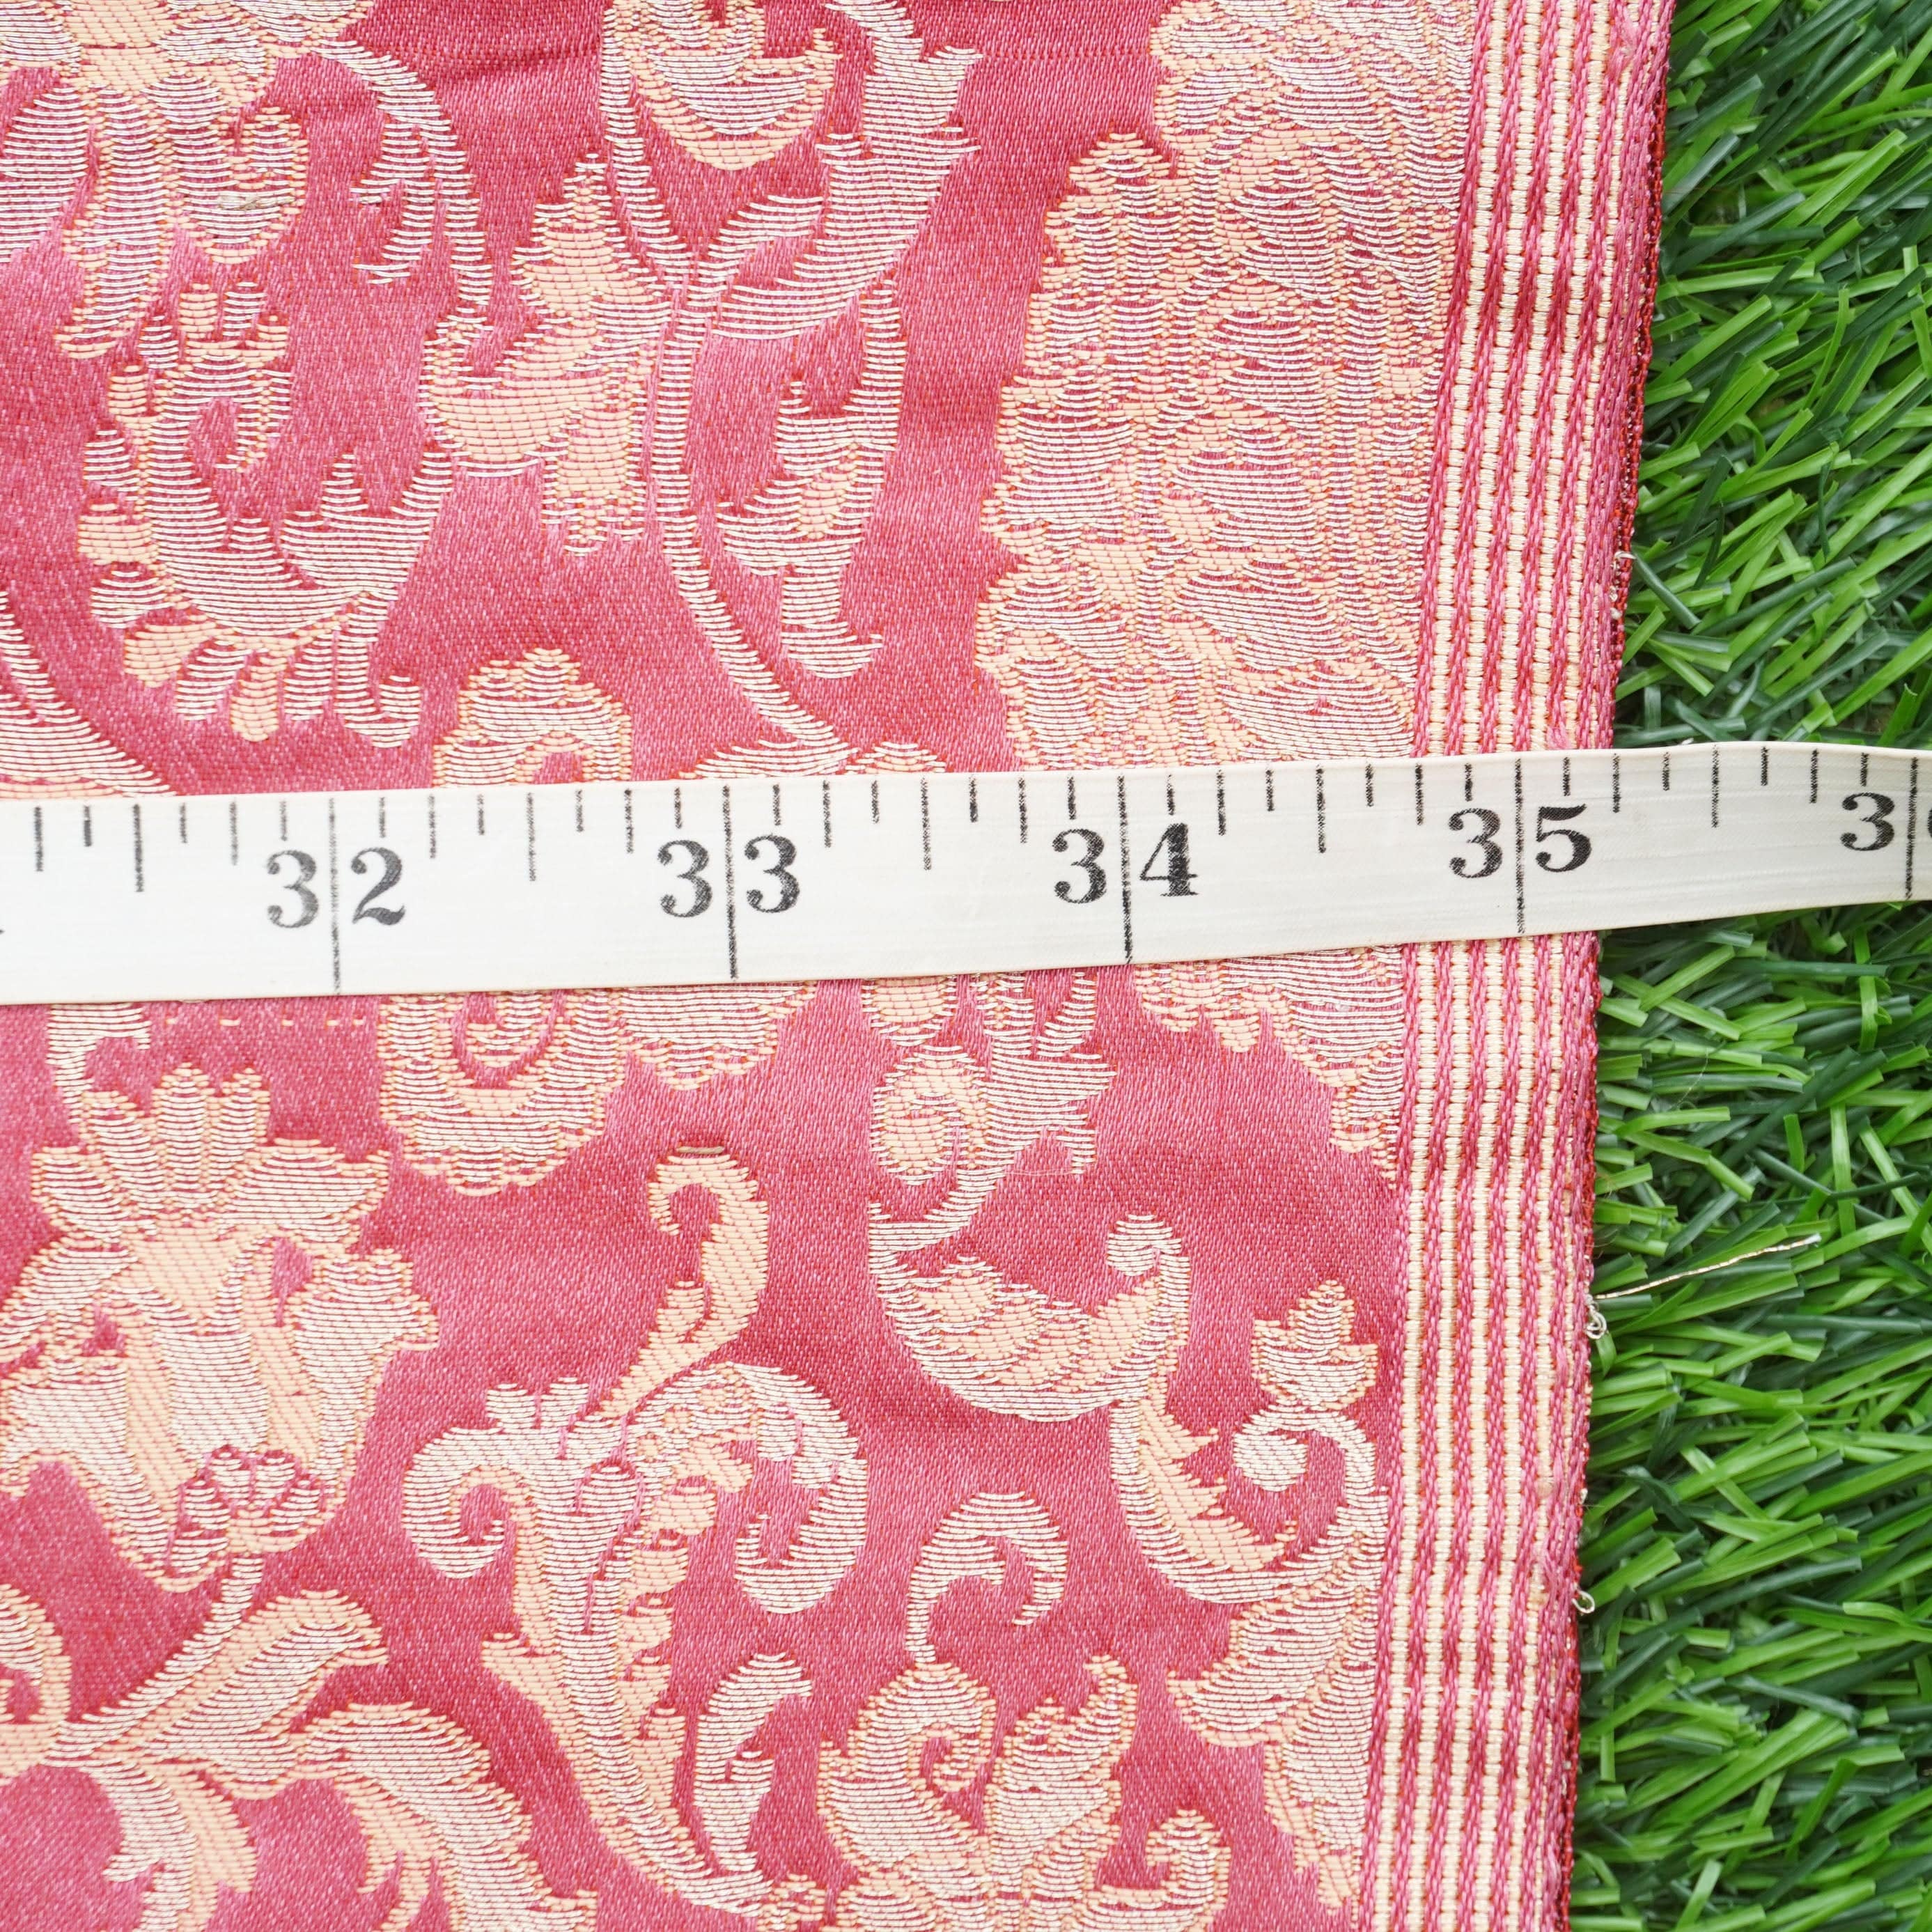 Pink Kinkhab / Kimkhab Brocade Banarasi Fabric